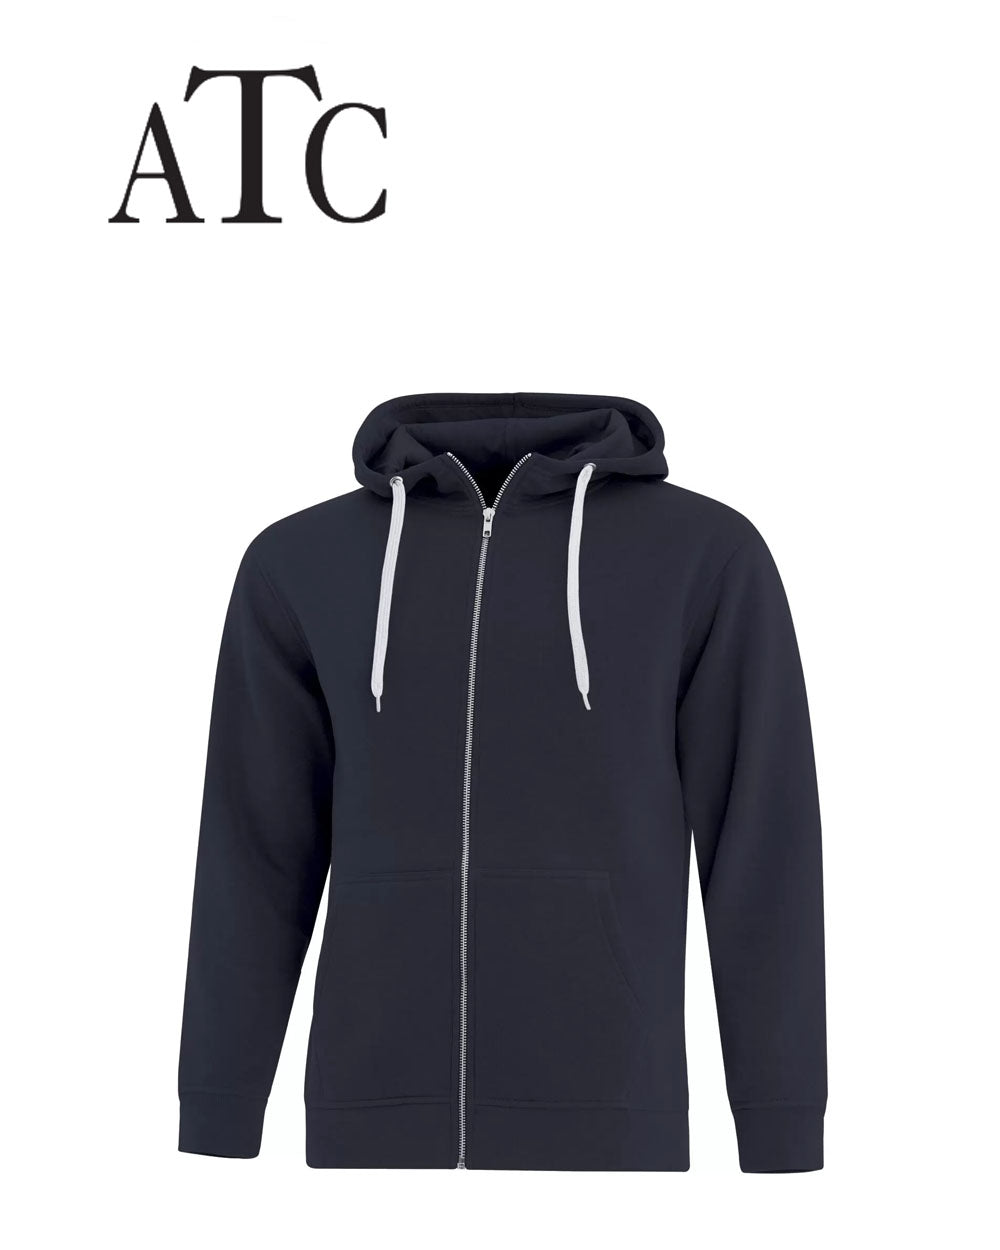 ATC ESACTIVE Premum Full Zip Hooded Sweatshirt